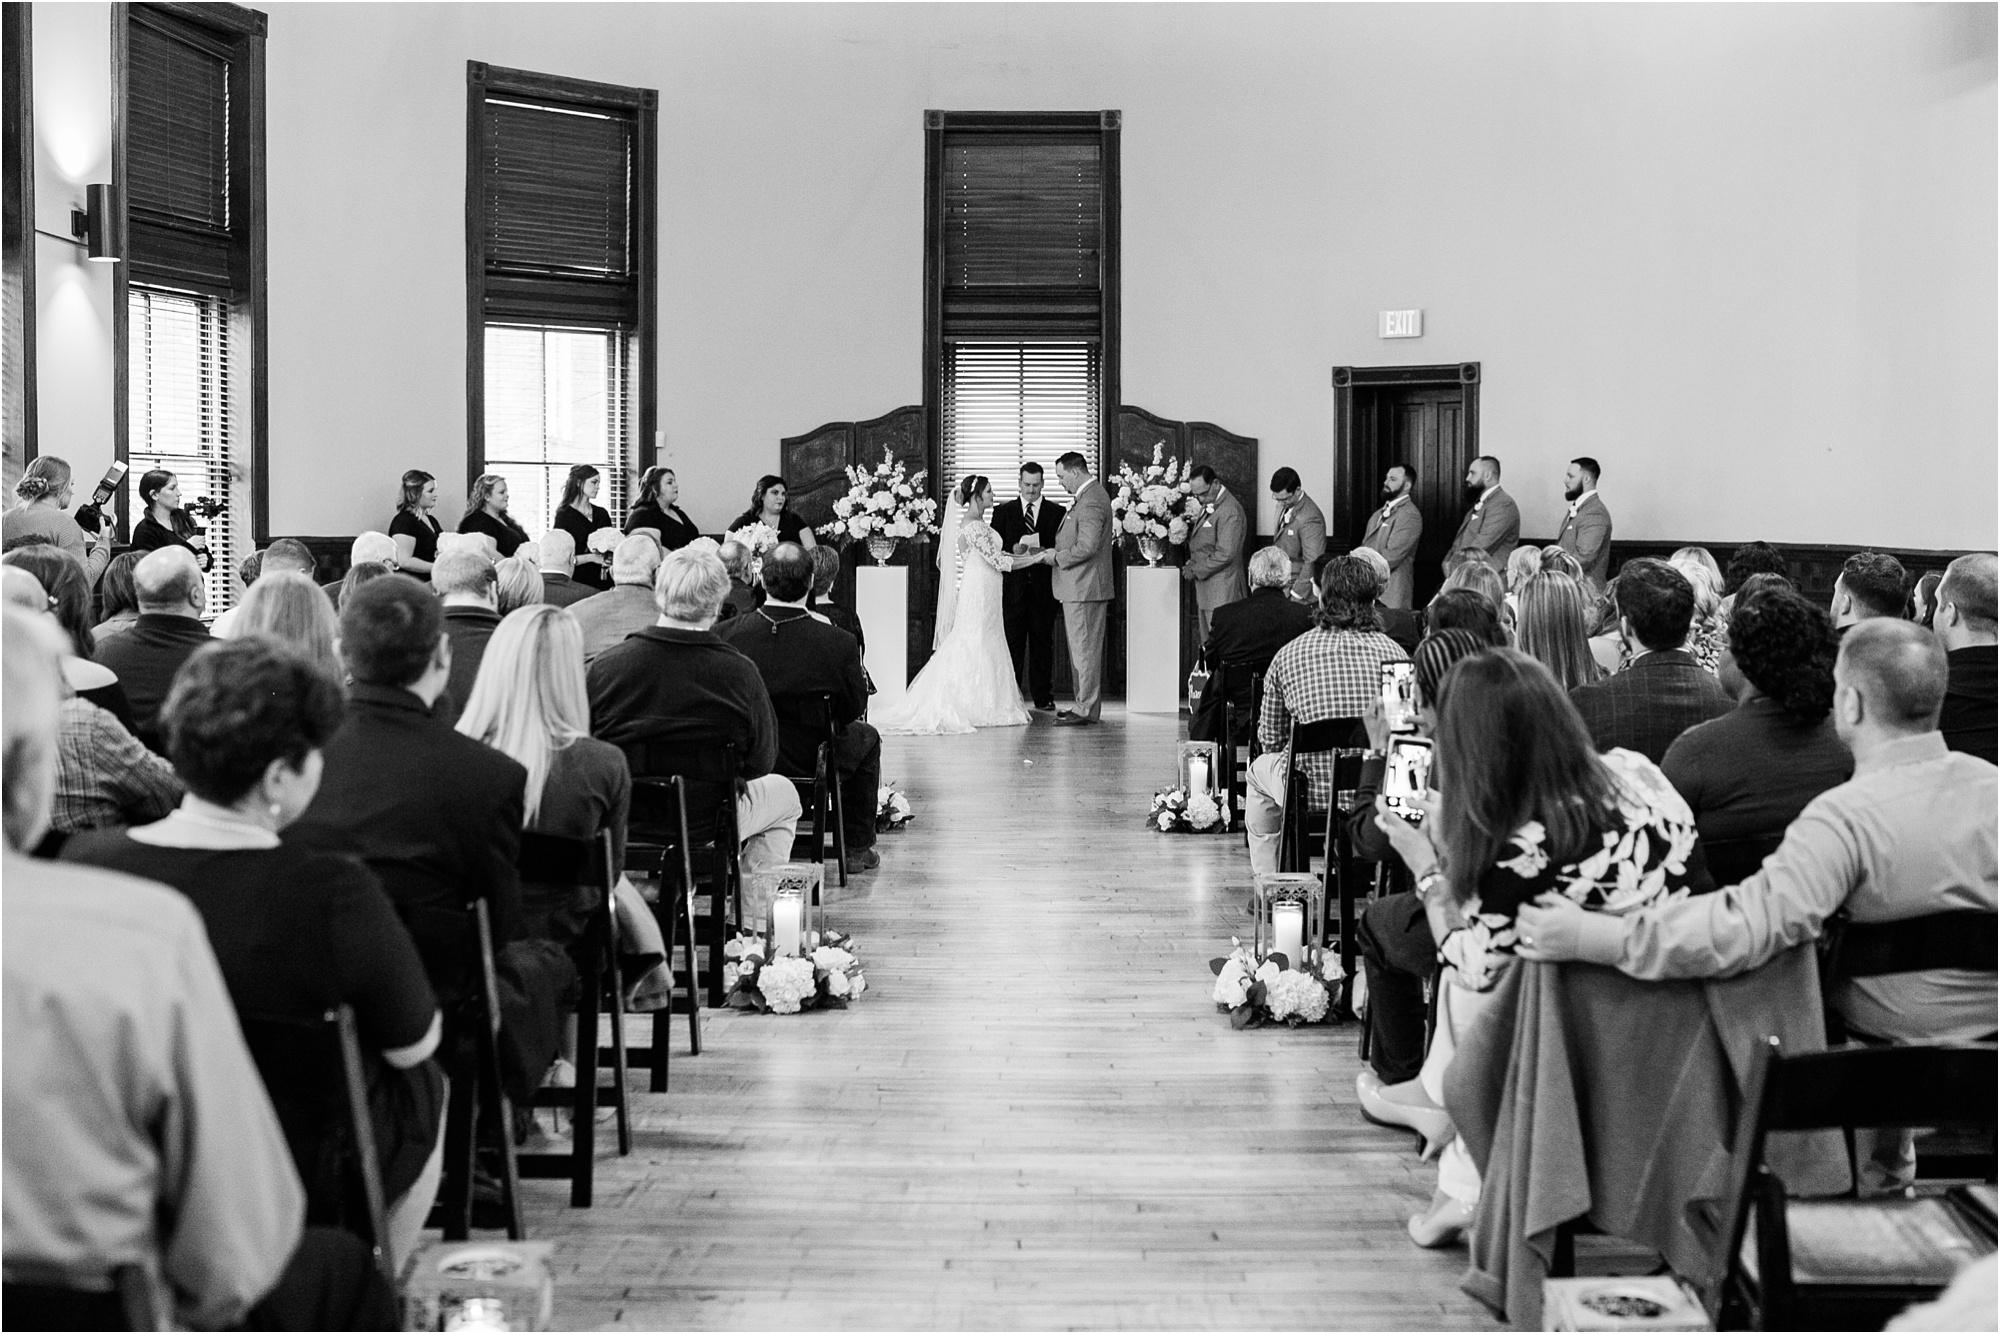 www.stephaniegorephoto.com library ballroom wedding ceremony